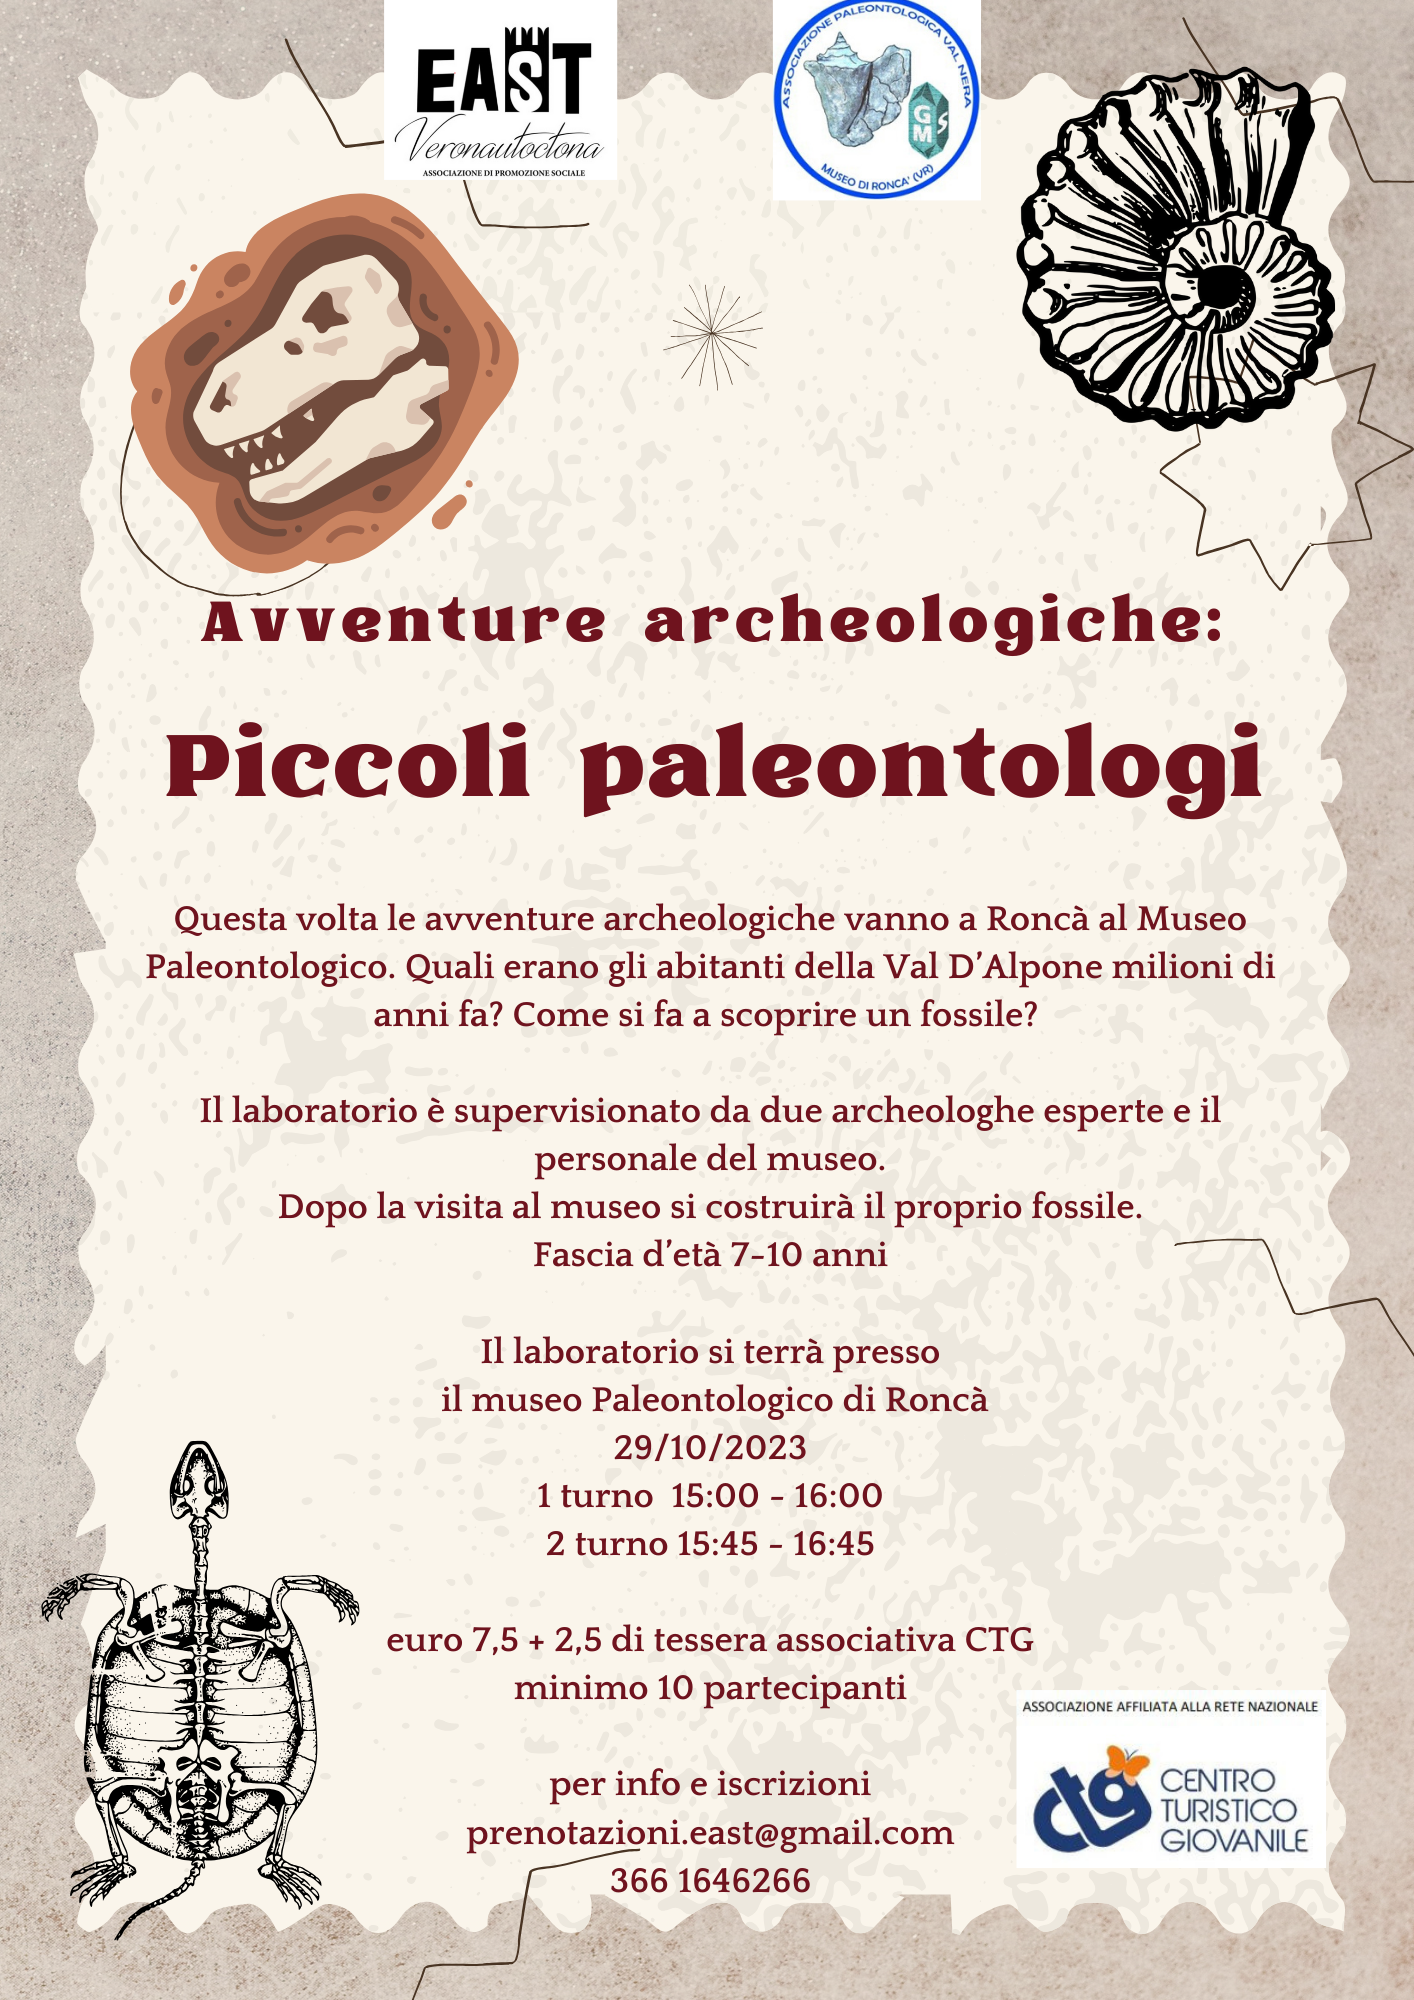 Avventure archeologiche: piccoli paleontologi